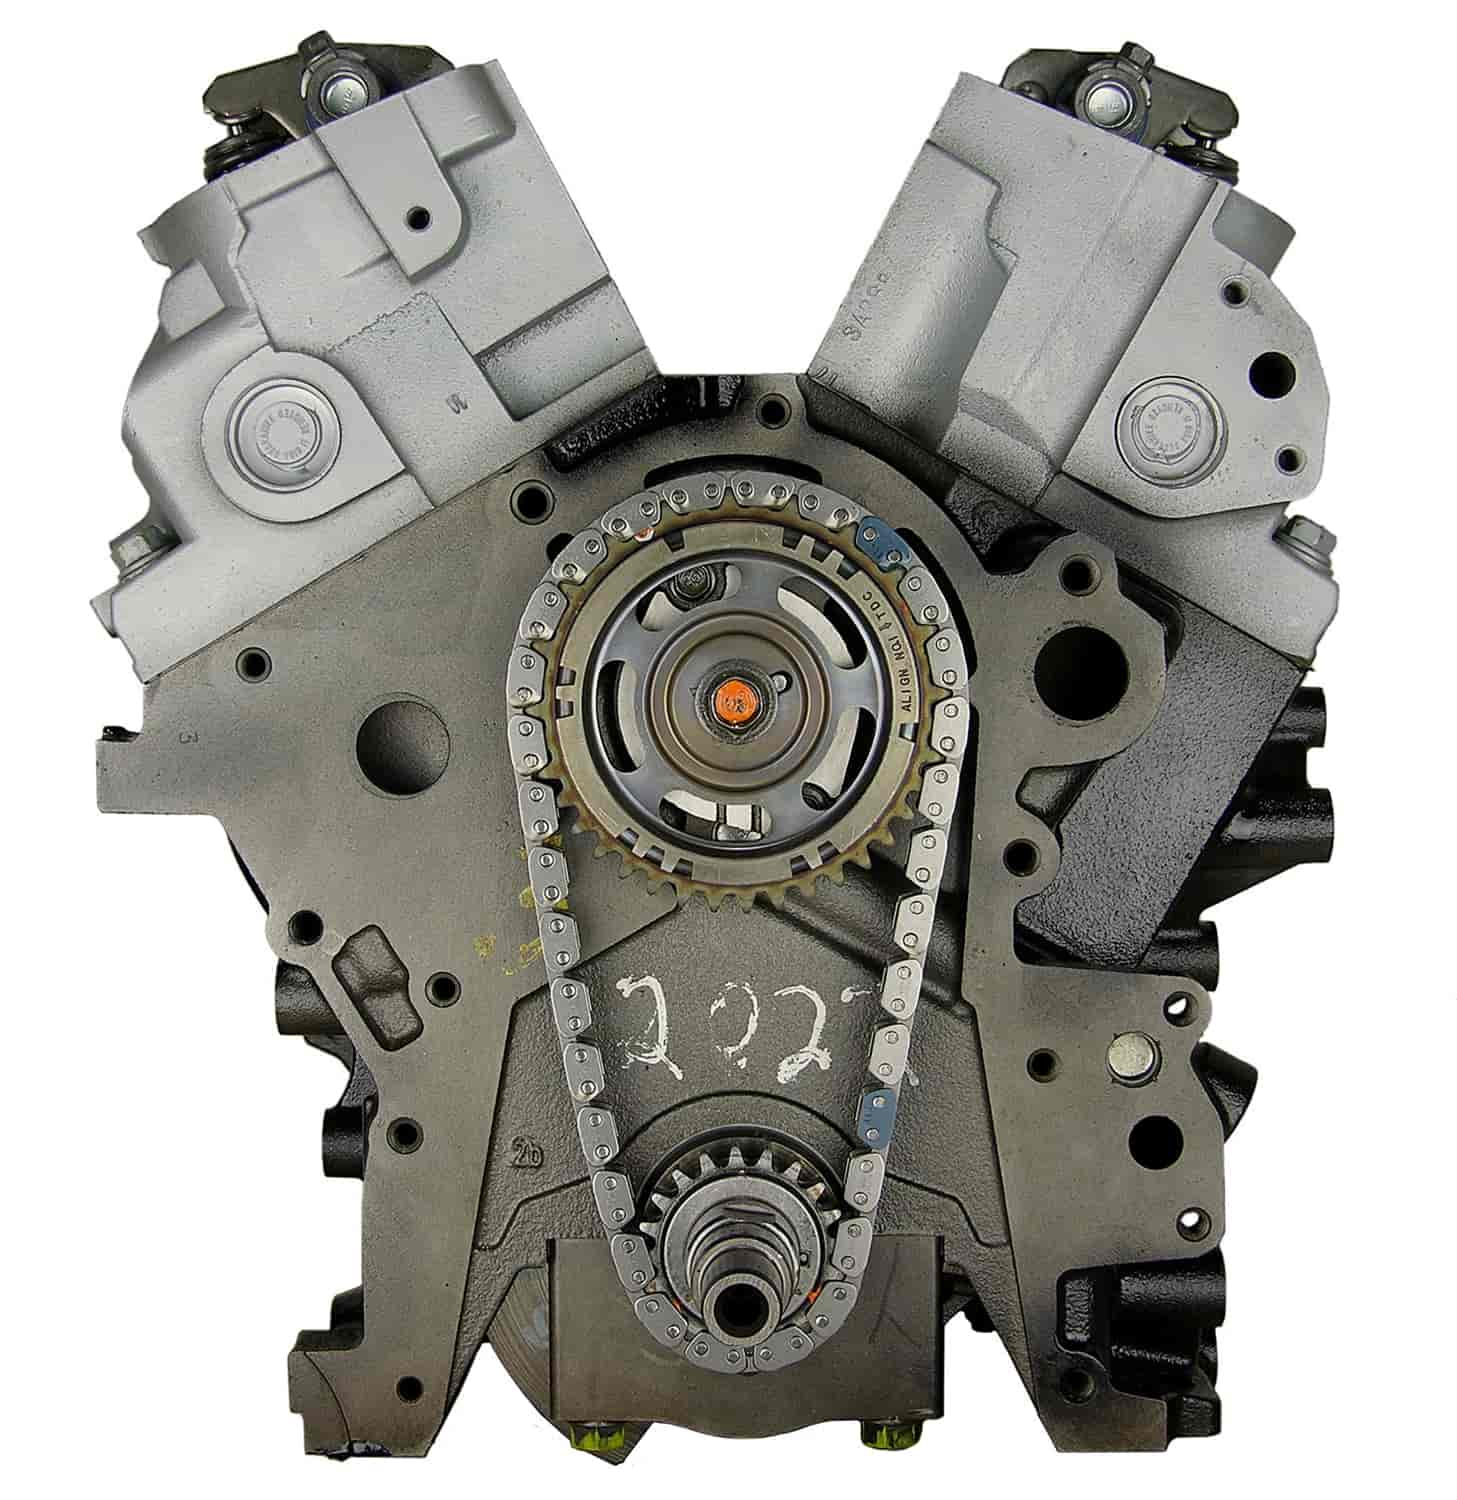 Remanufactured Crate Engine for 2007 Chrysler/Dodge with 3.3L V6